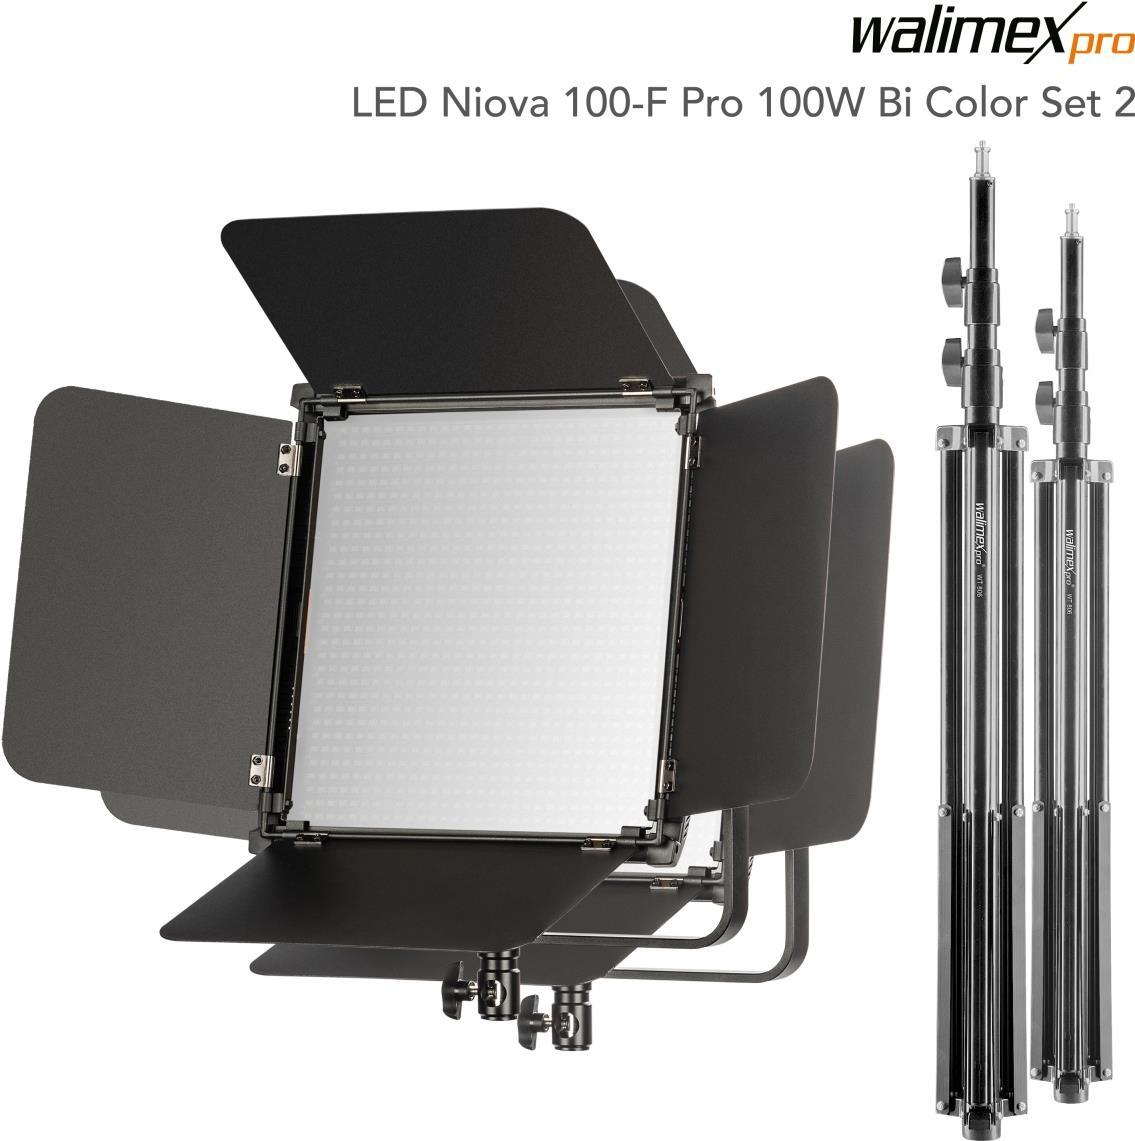 Walimex pro LED Niova 100-F Pro 100W Bi Color Set2 (23217) von Mantona